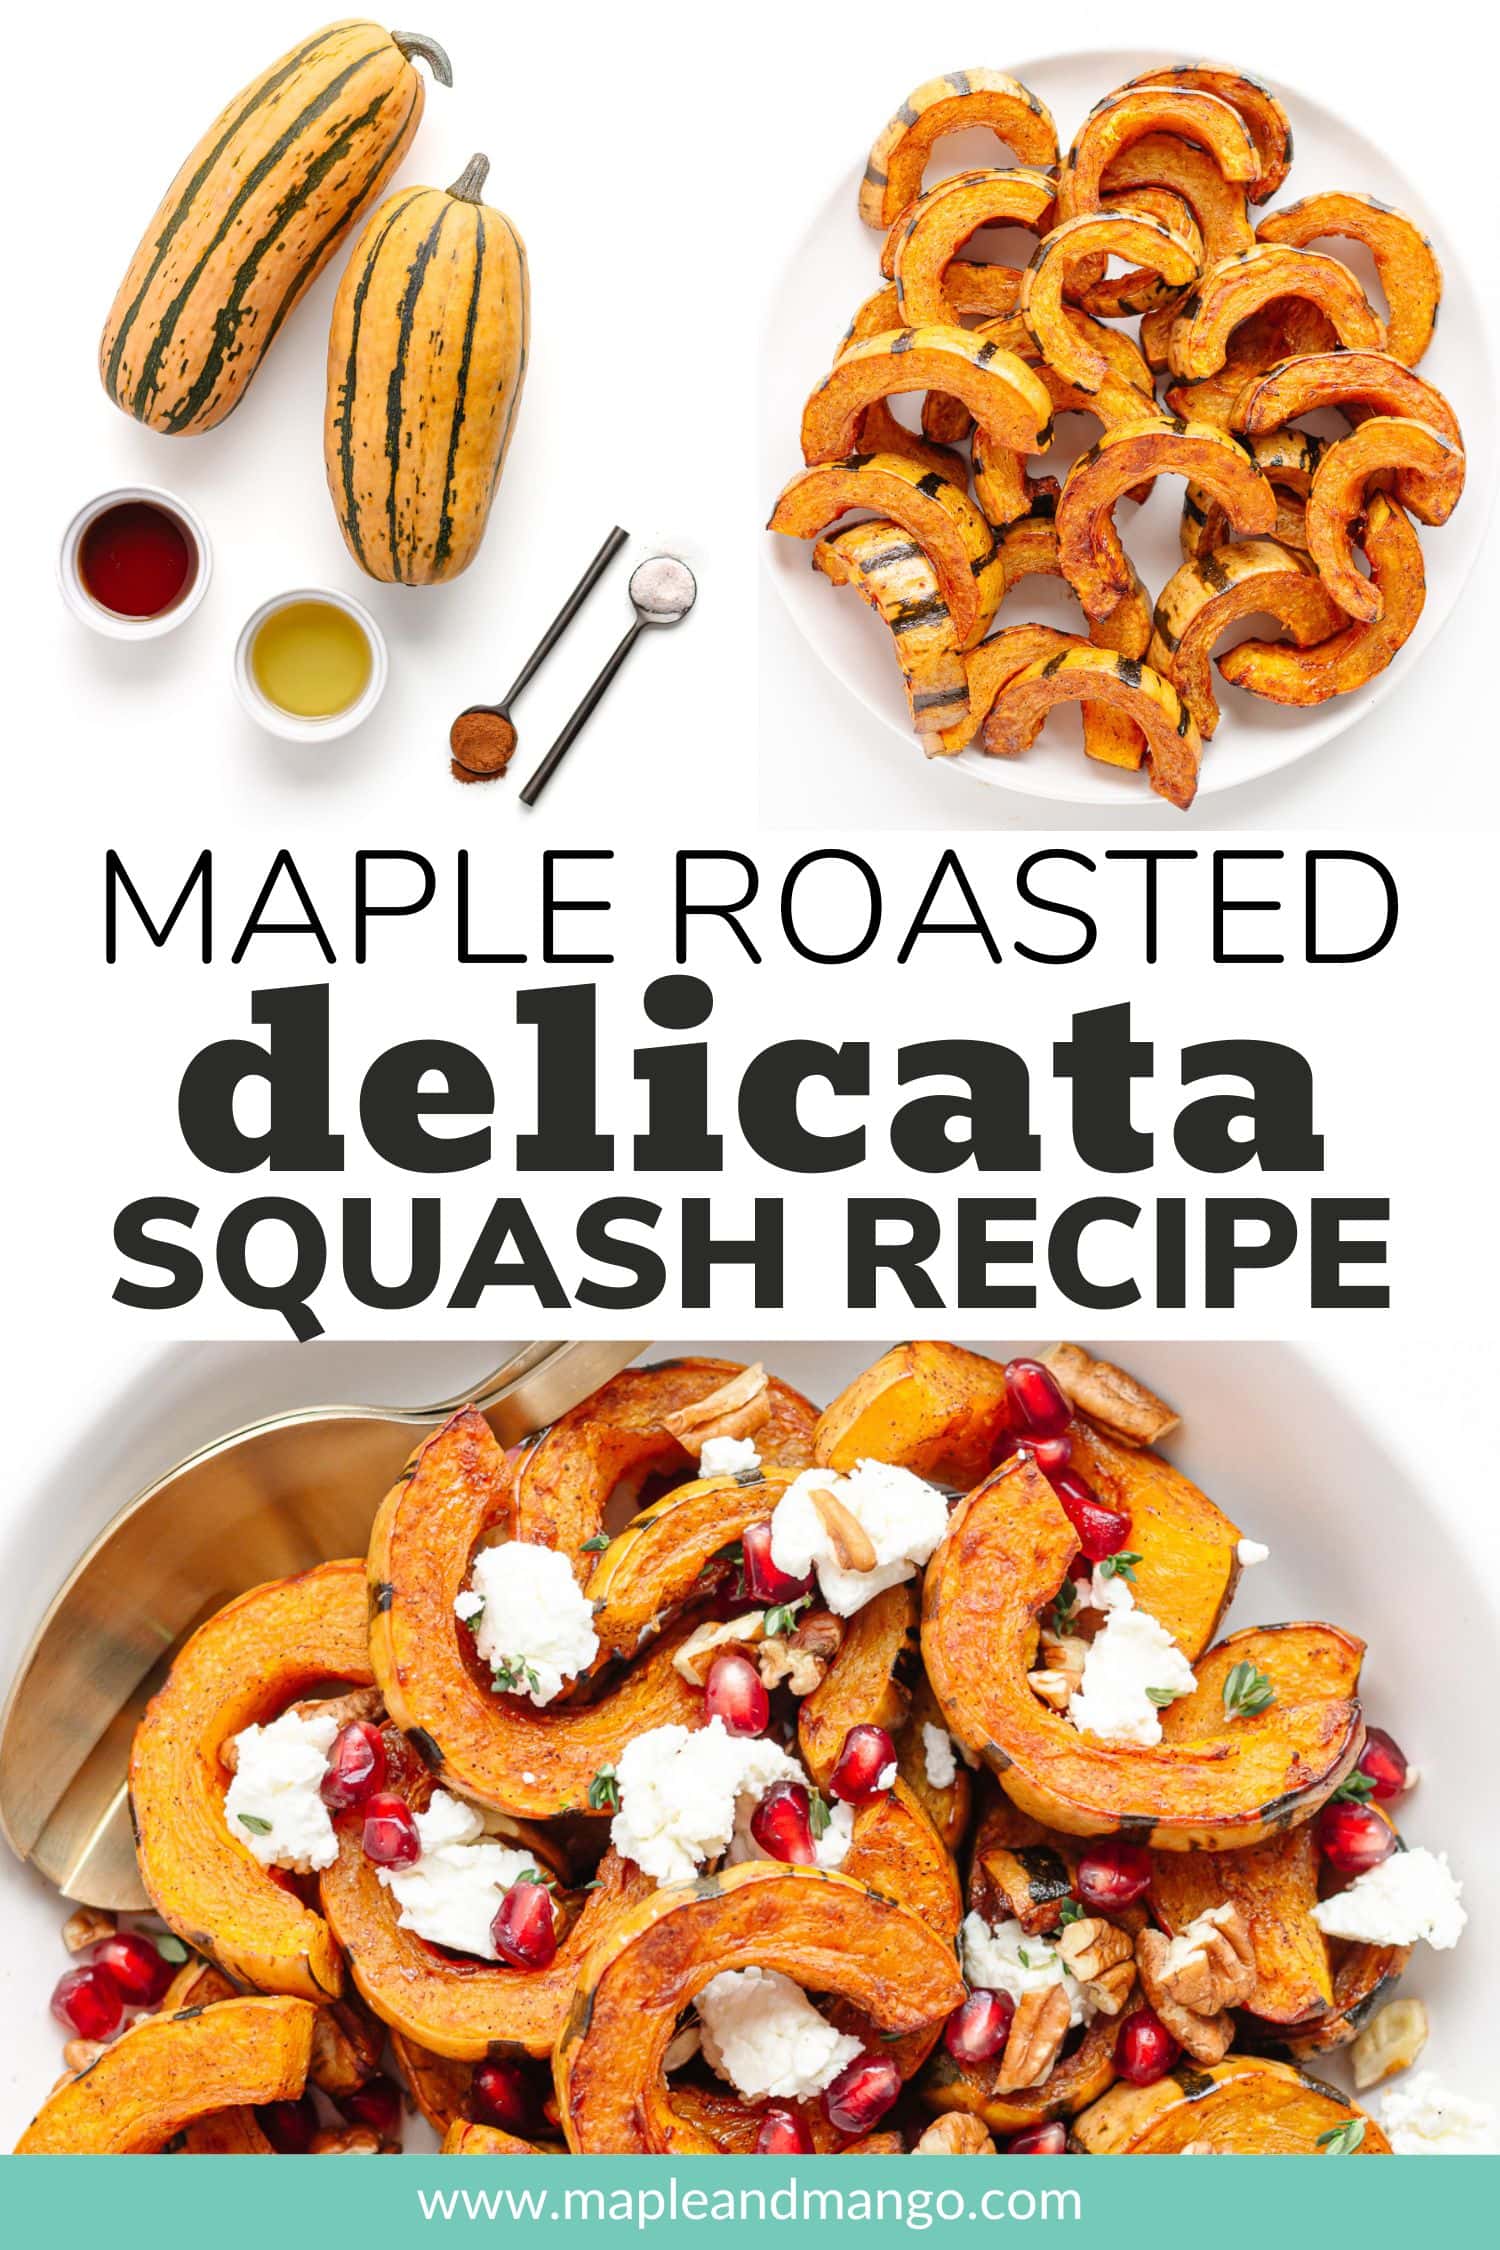 Photo collage of roasted delicata squash photos with text overlay "Maple Roasted Delicata Squash Recipe".